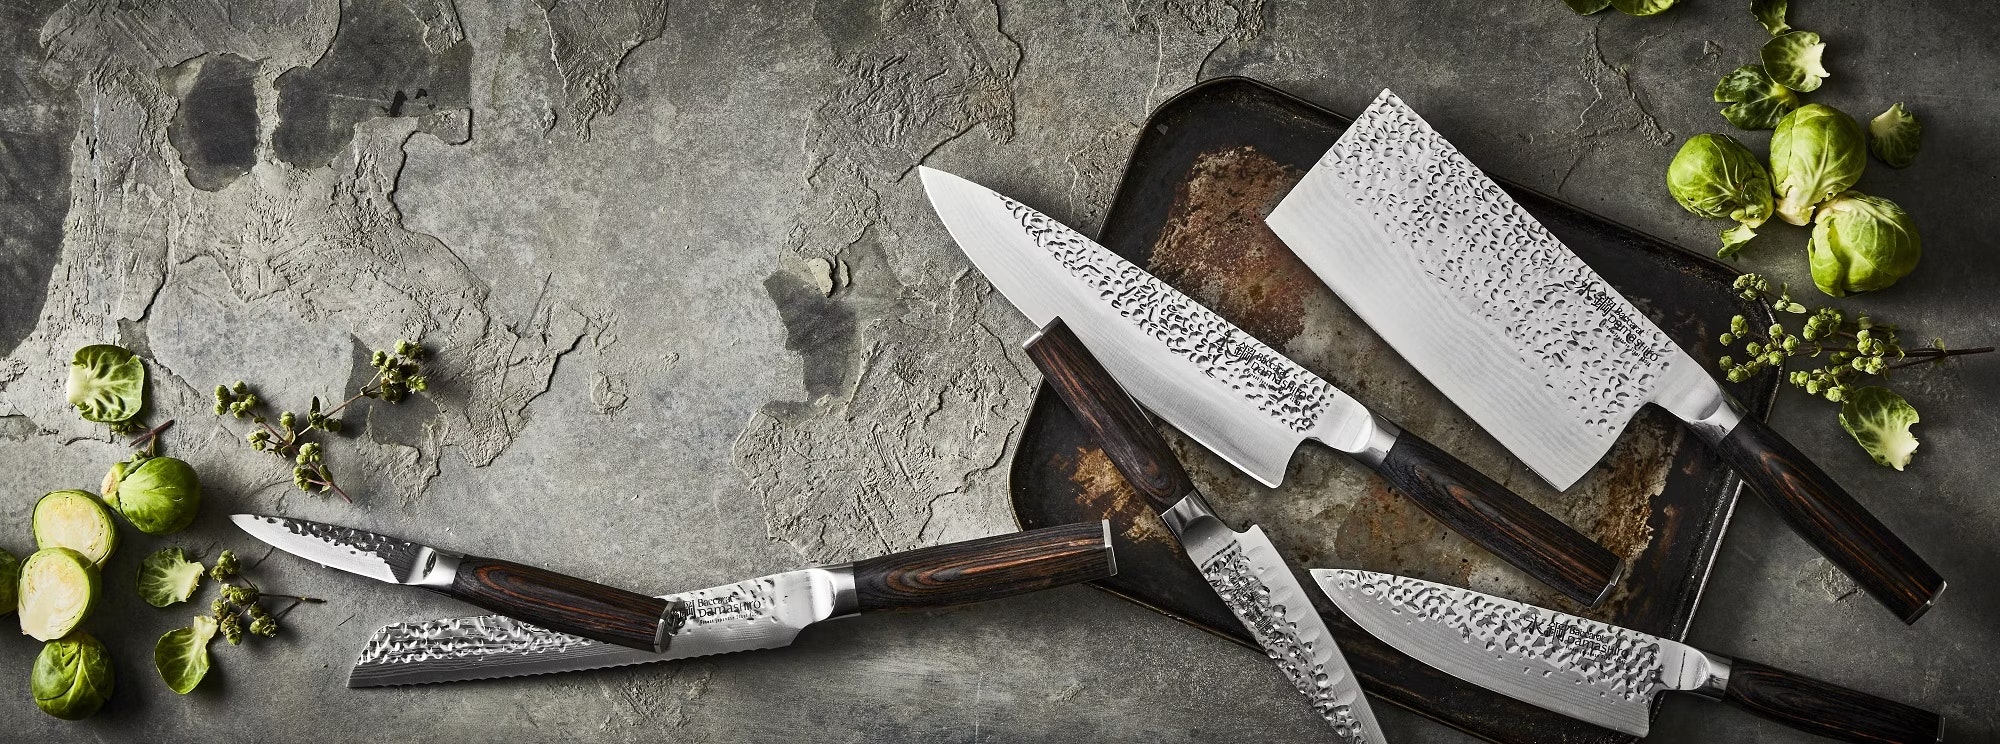 kitchen knives littered across a kitchen bench